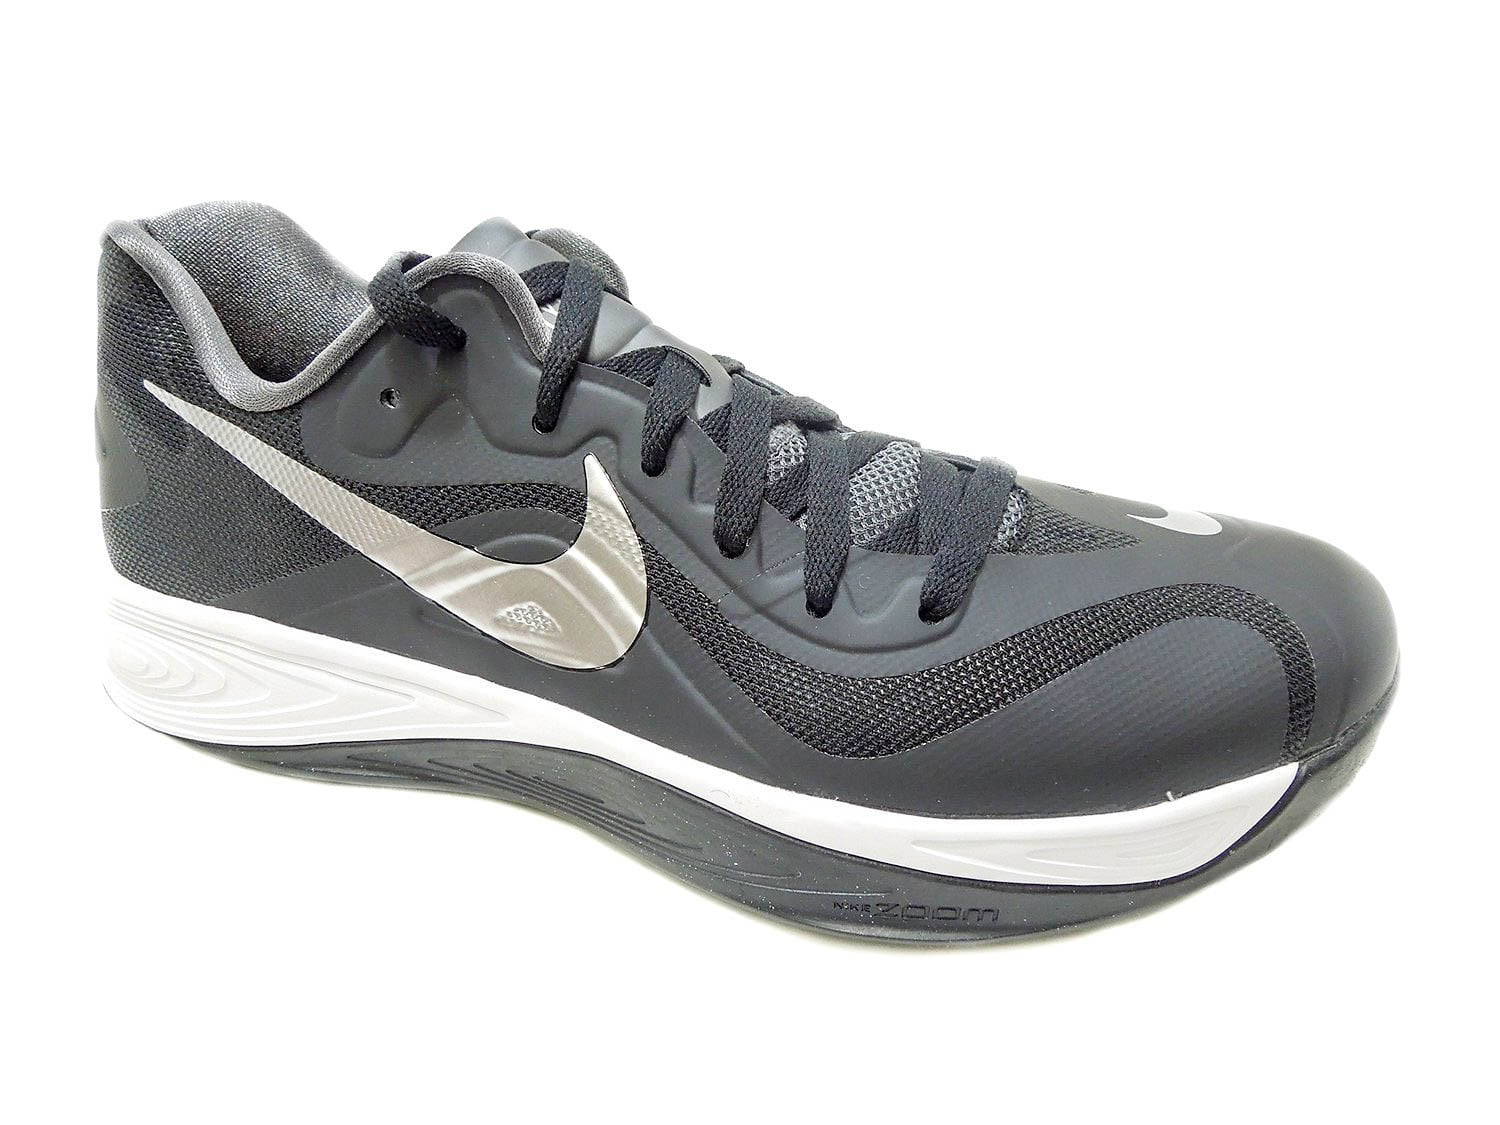 Nike Hyperfuse Low TB Mens Basketball Shoes Black Metallic Silver Greyn -